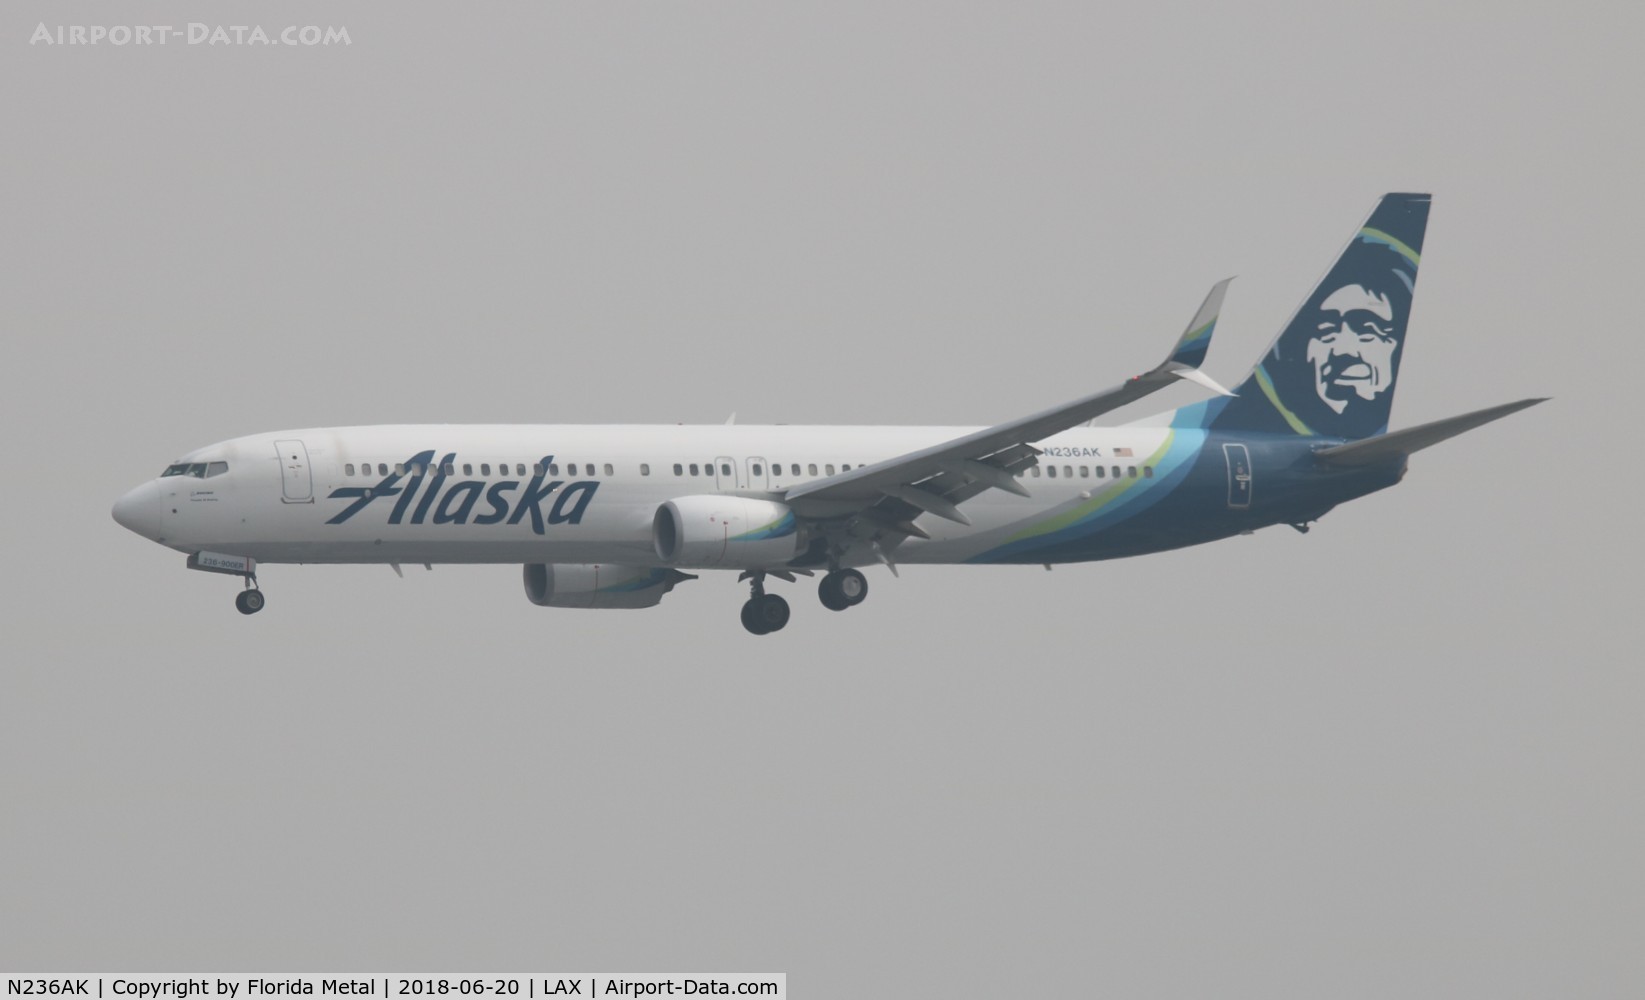 N236AK, 2016 Boeing 737-990/ER C/N 36351, Alaska